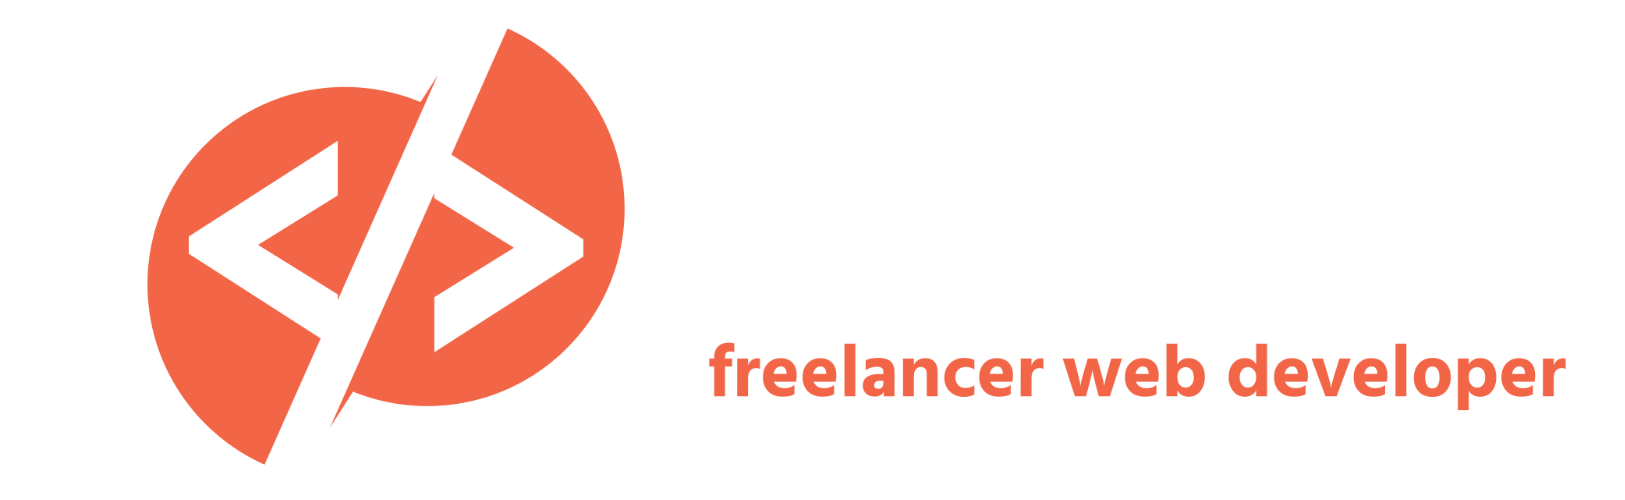 taradys.com